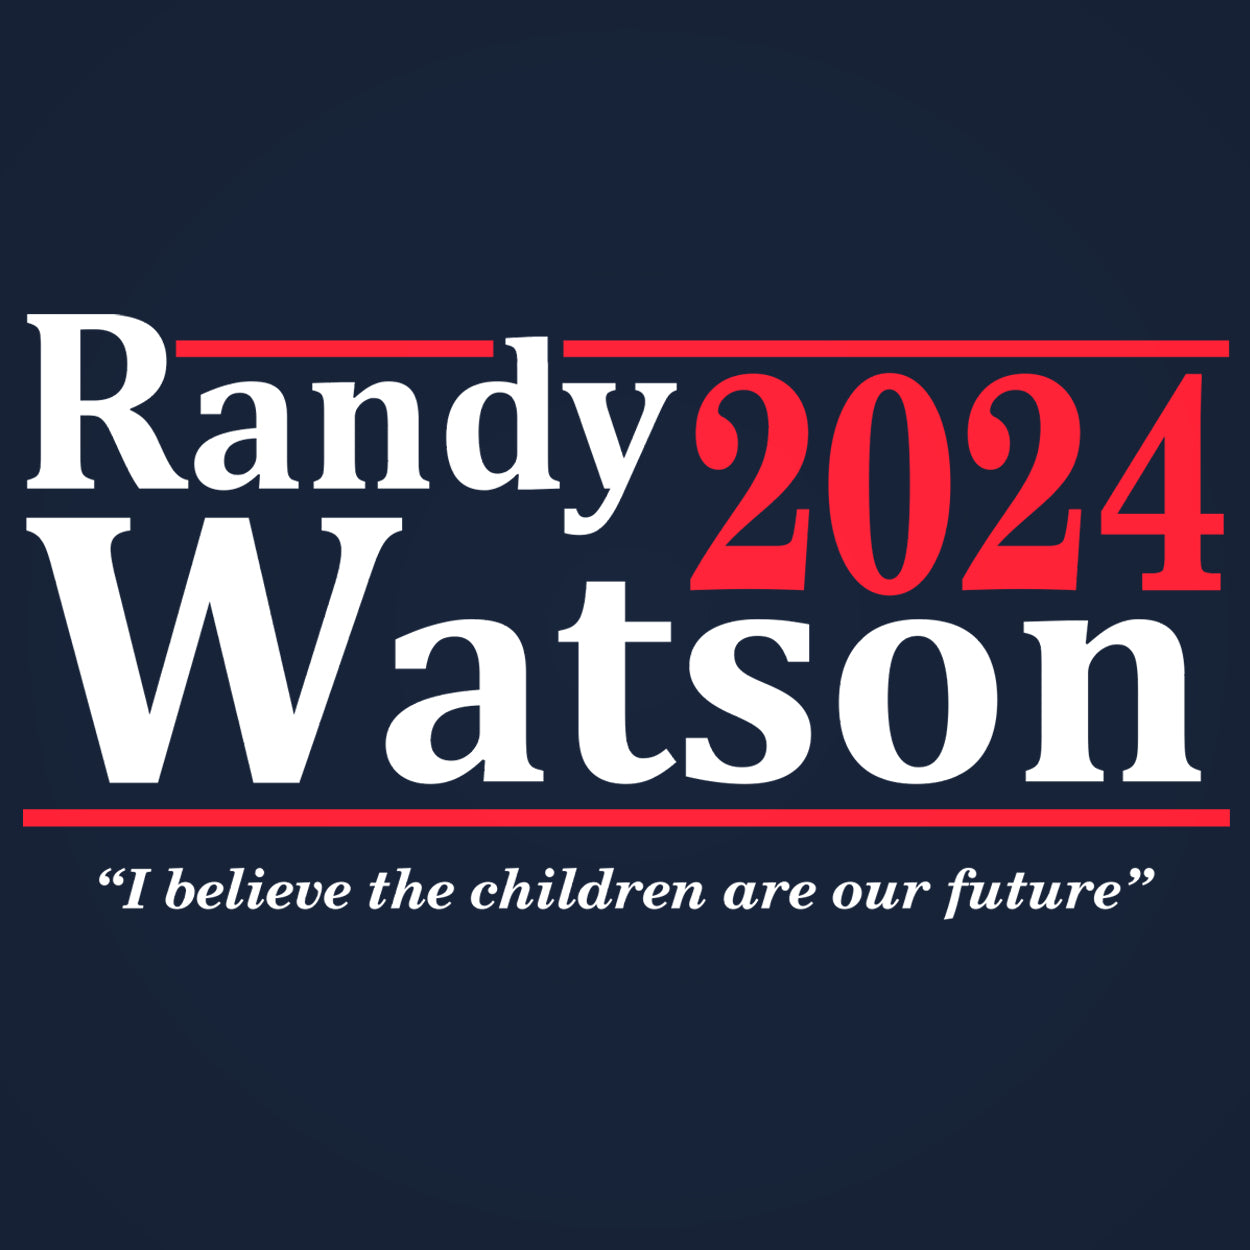 Randy Watson 2024 Election Tshirt - Donkey Tees